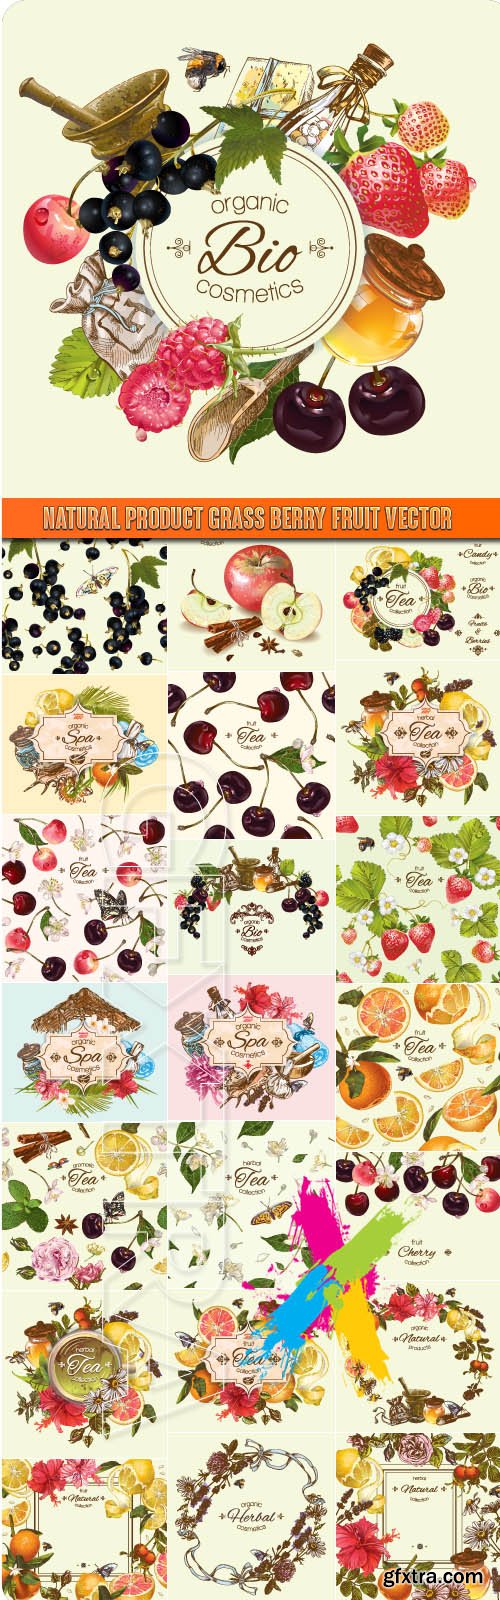 Natural organic product herbal berry fruit vector